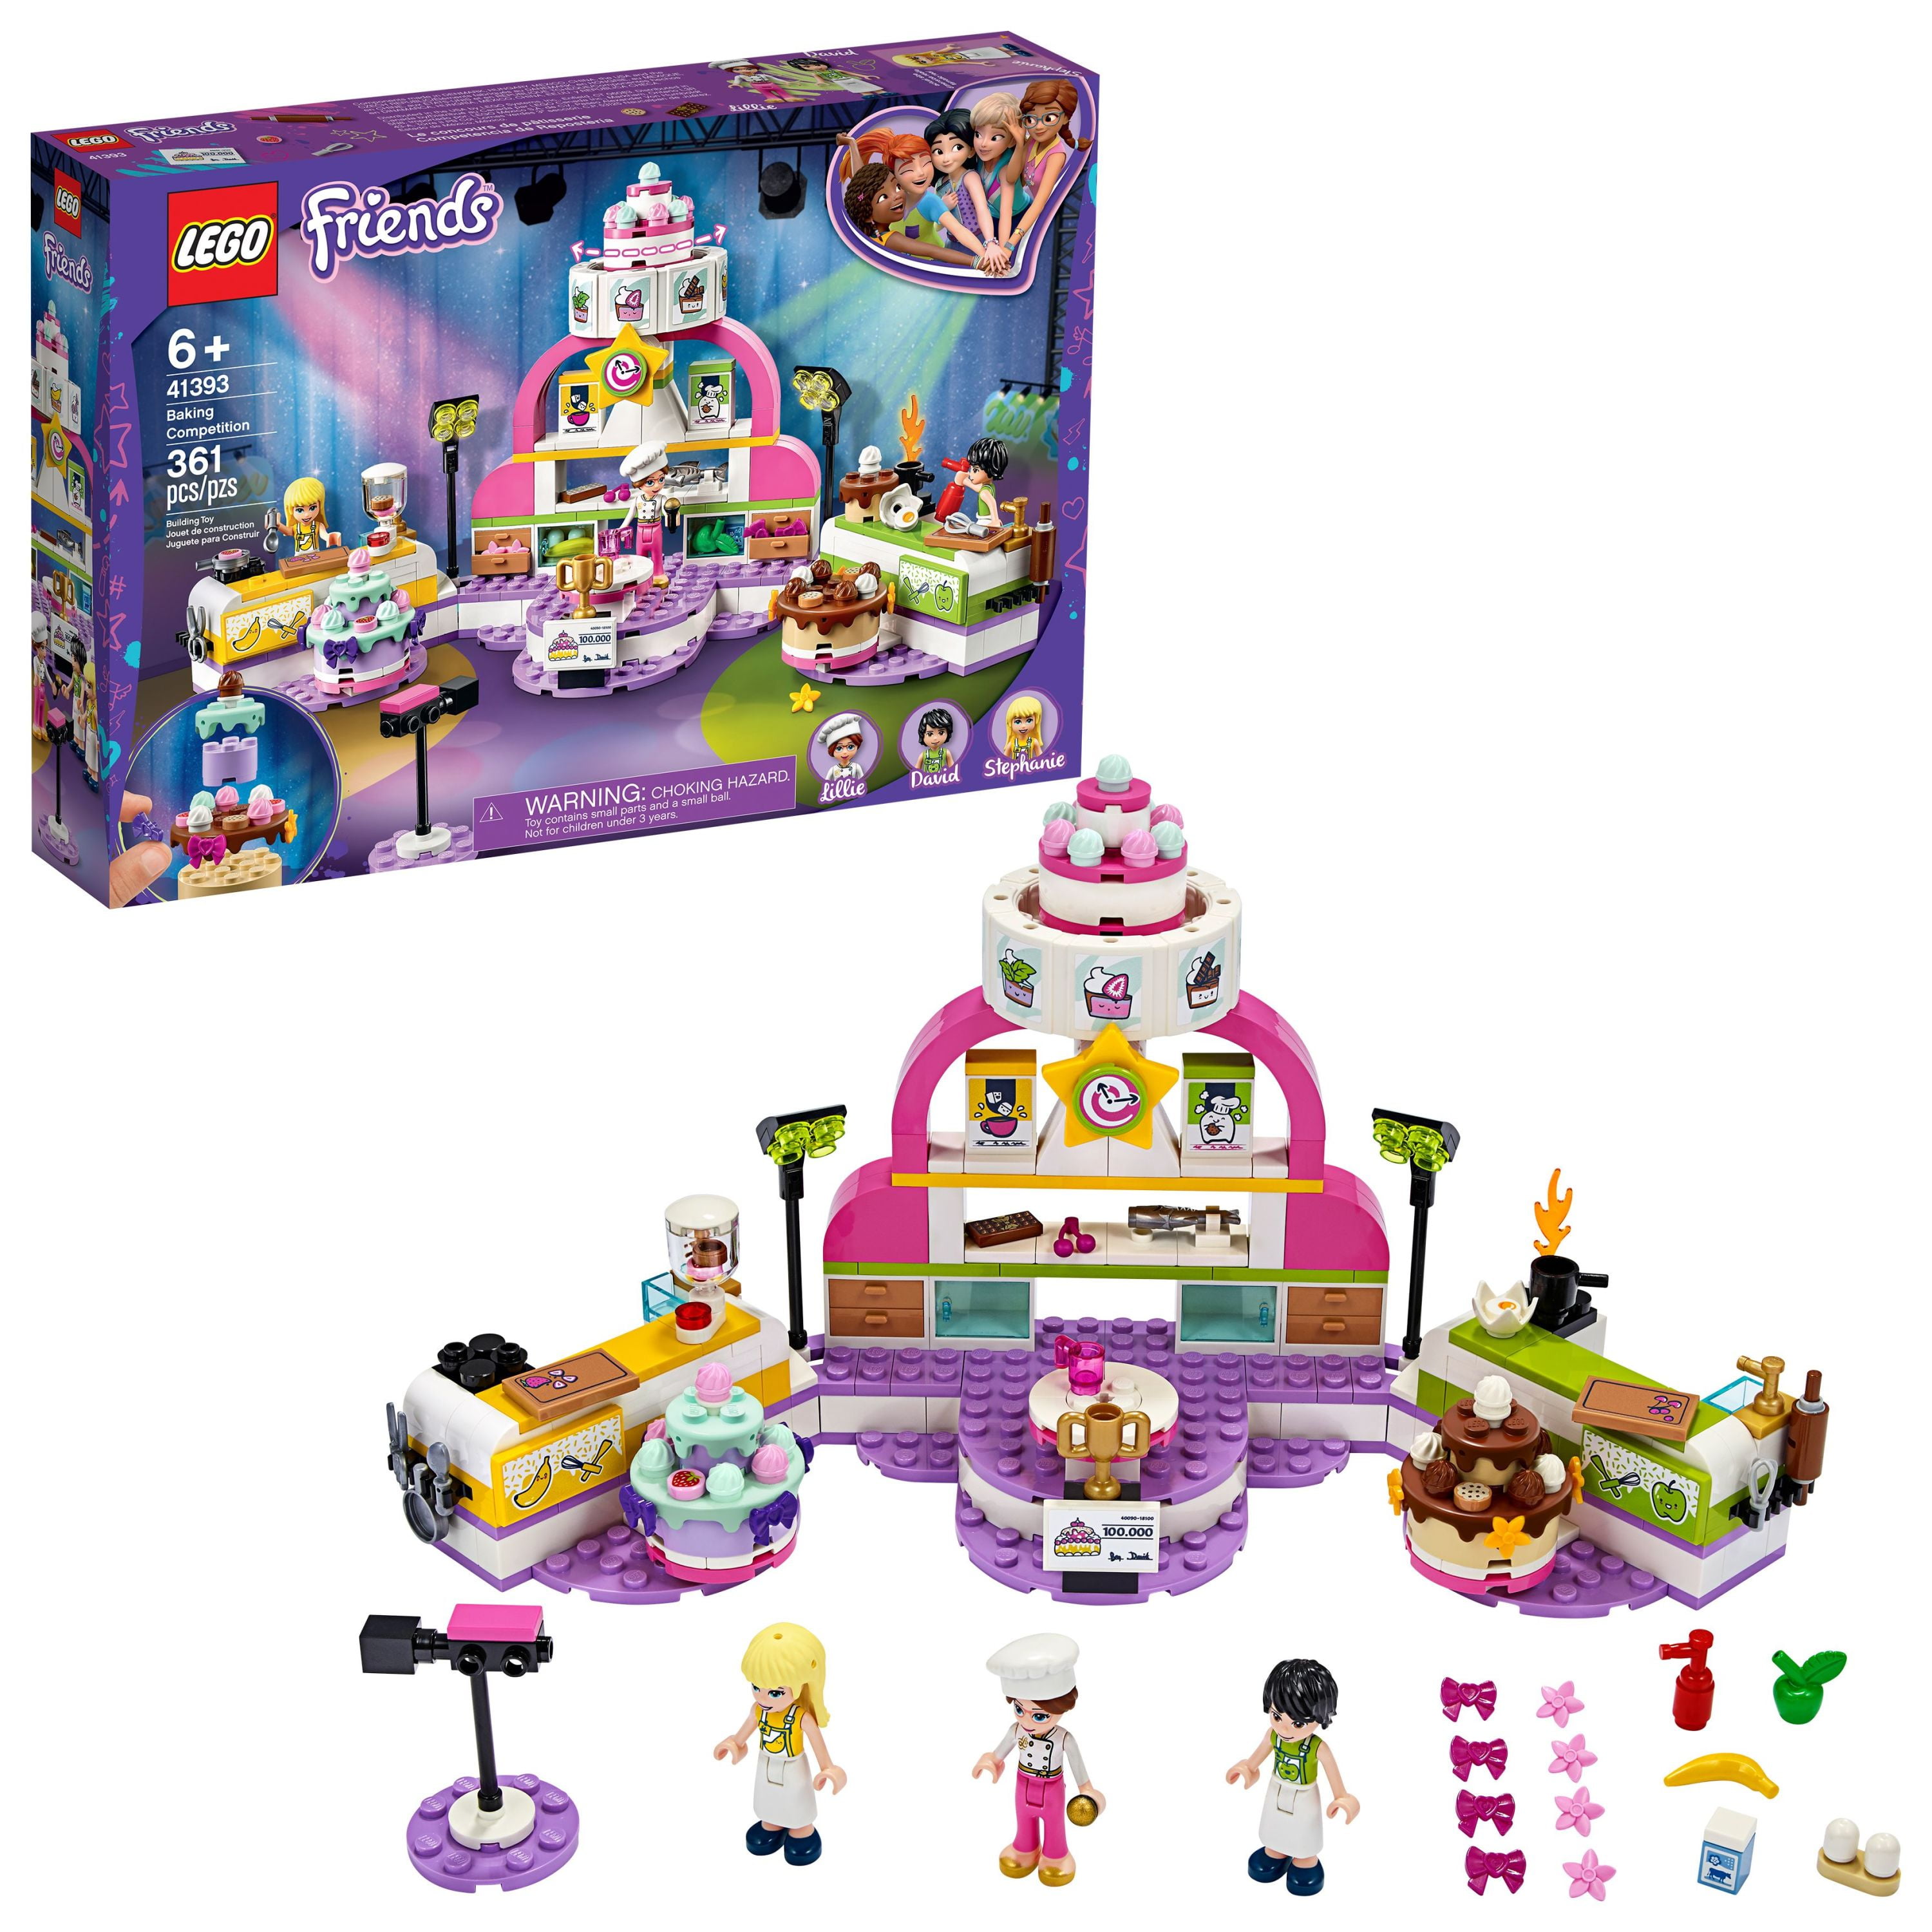 LEGO Friends 41393 Creative Building Toy for Girls Pieces) - Walmart.com